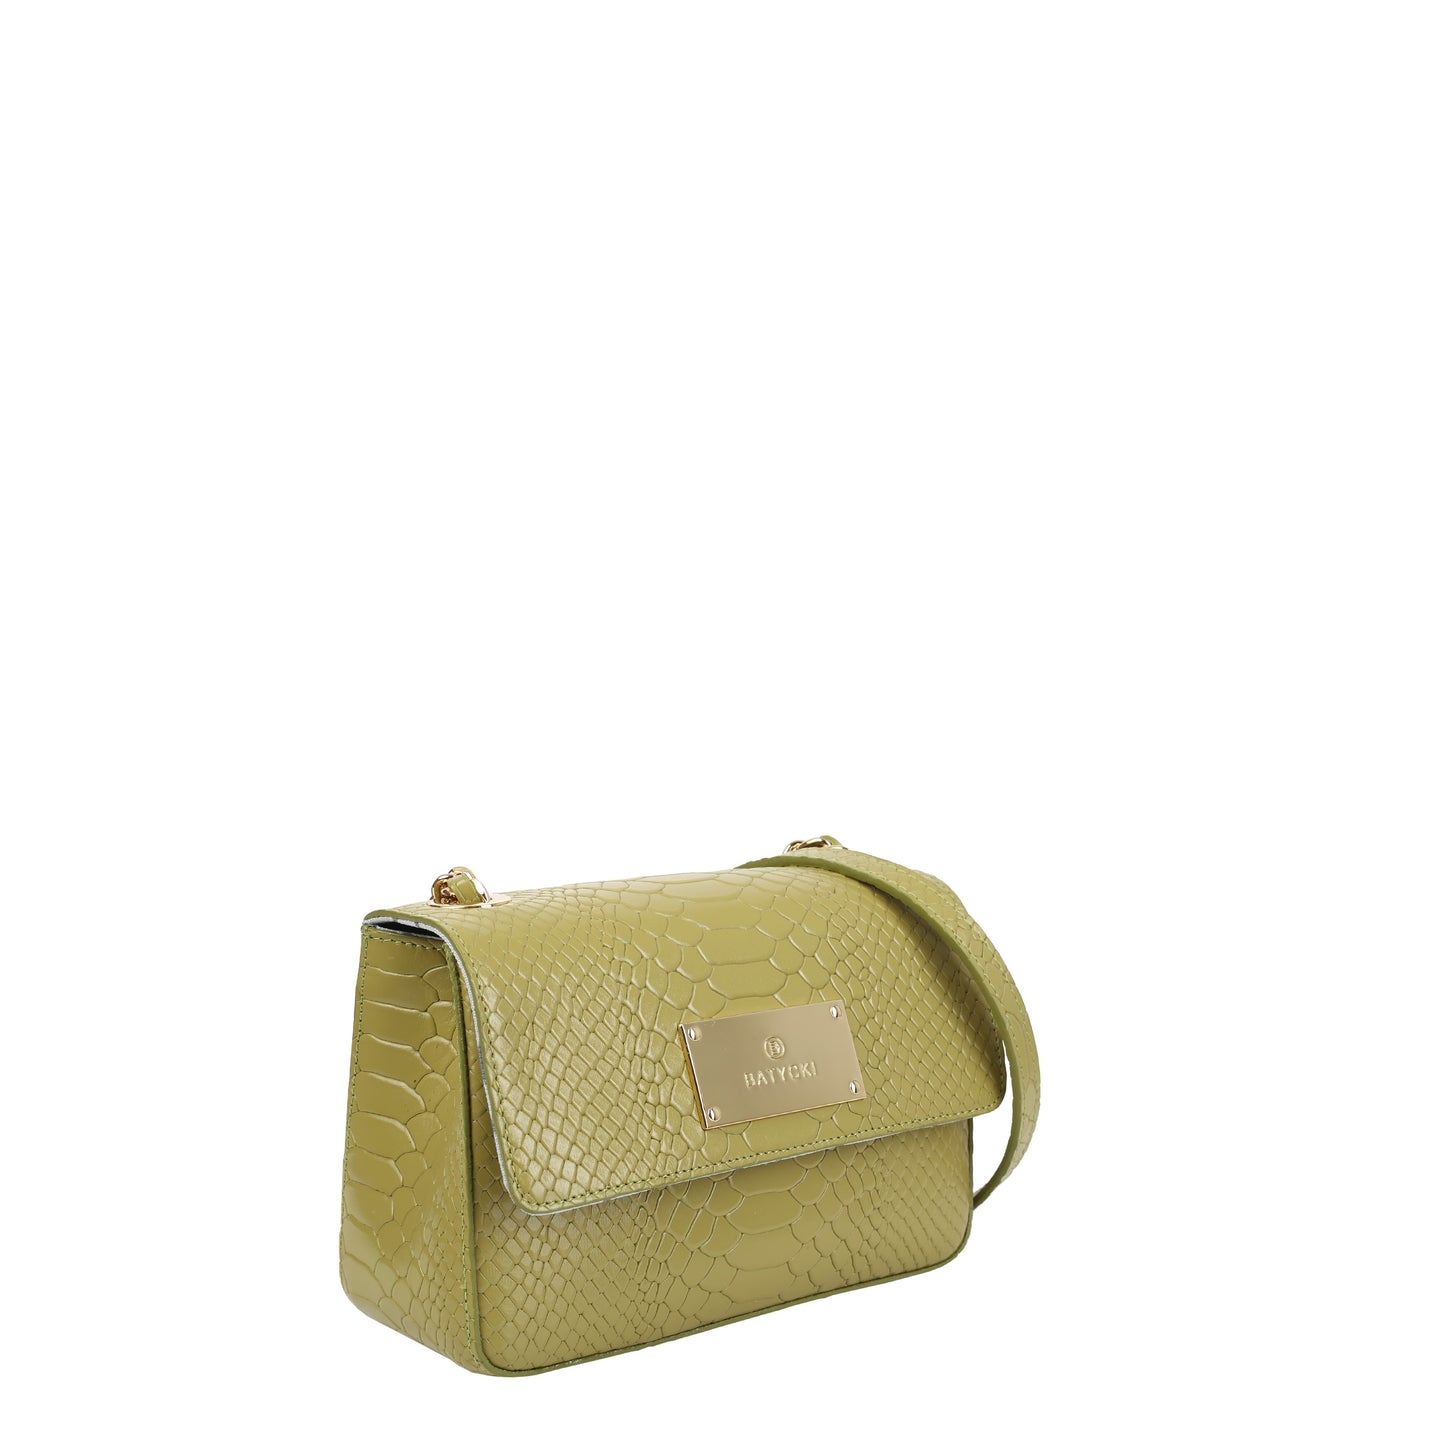 ELLE OLIVE women's leather handbag